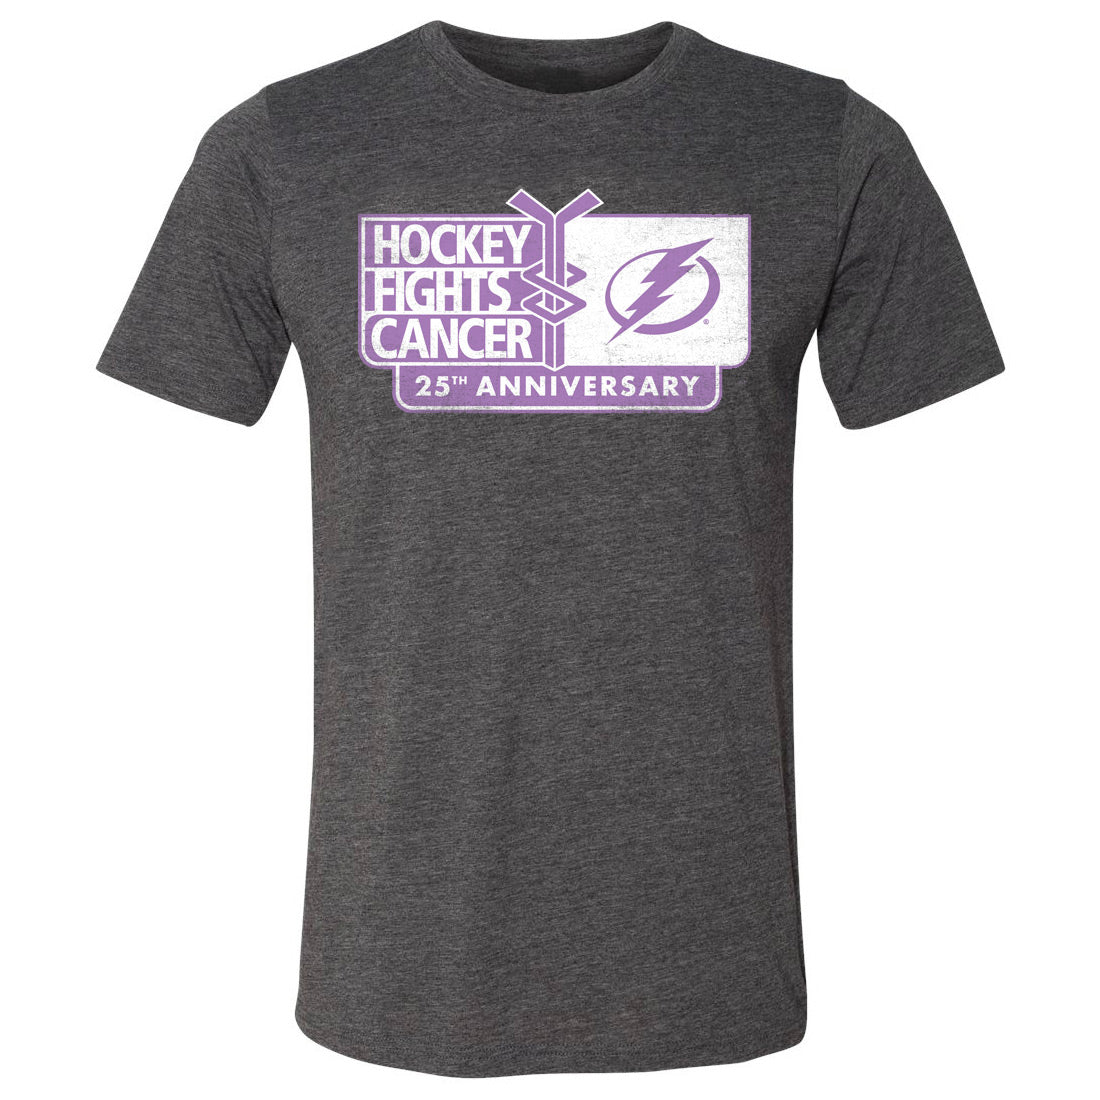 Tampa Bay Lightning 25th Anniversary Hockey Fights Cancer Tee